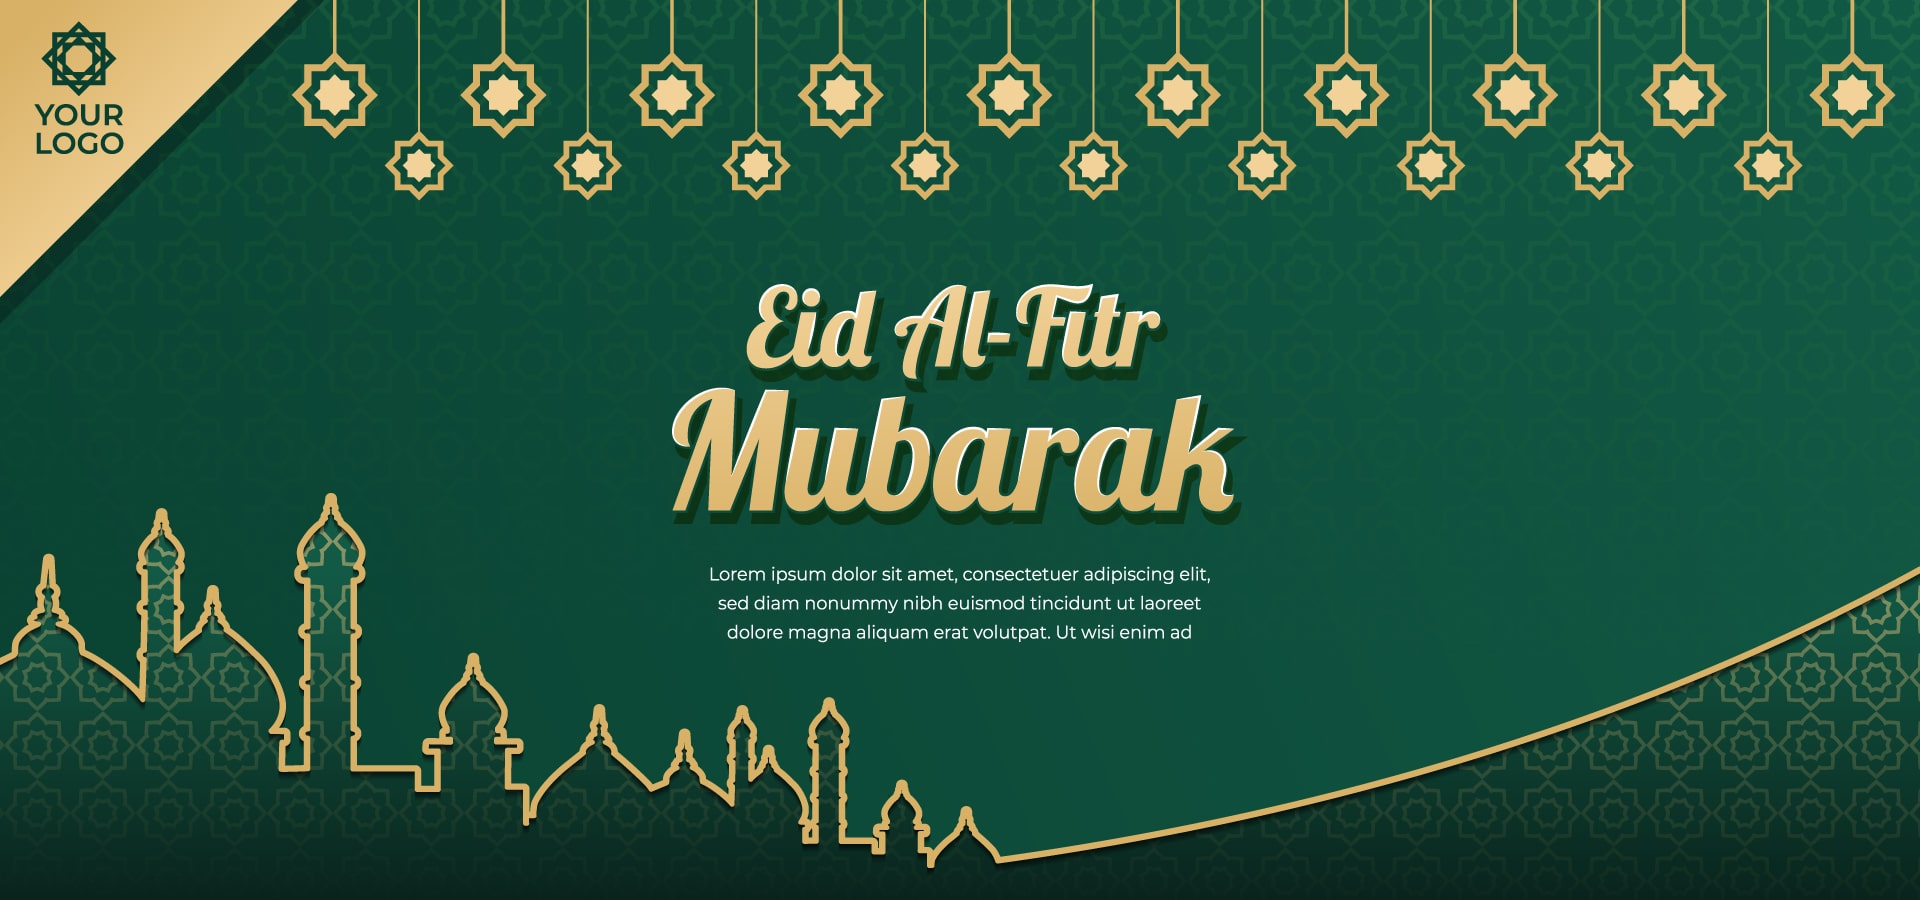 Eid Al Fitr Islamic Day With Background